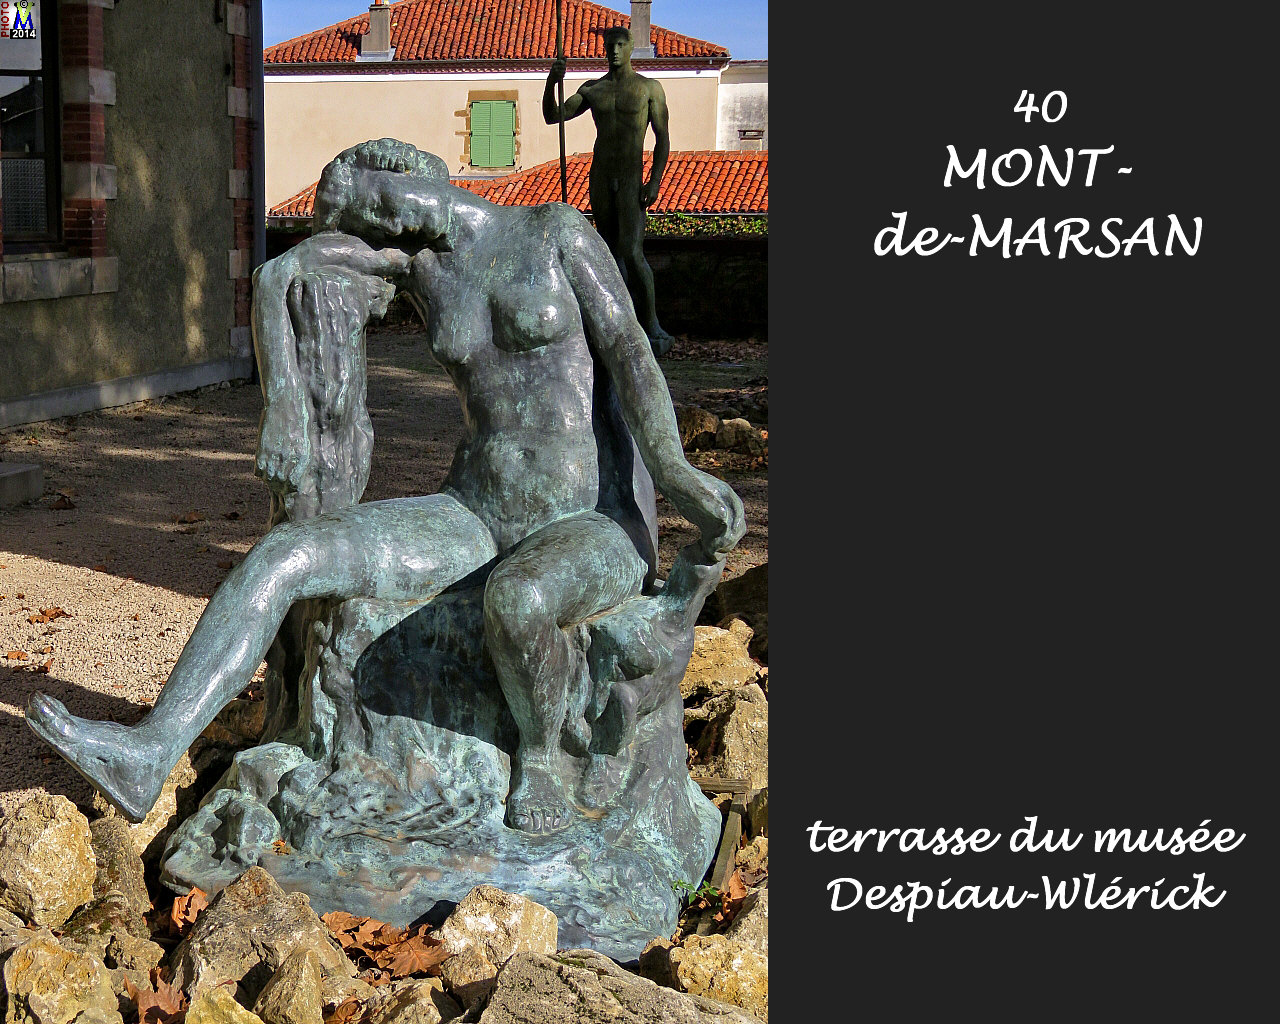 40MONT-MARSAN_terrassemusee_110.jpg